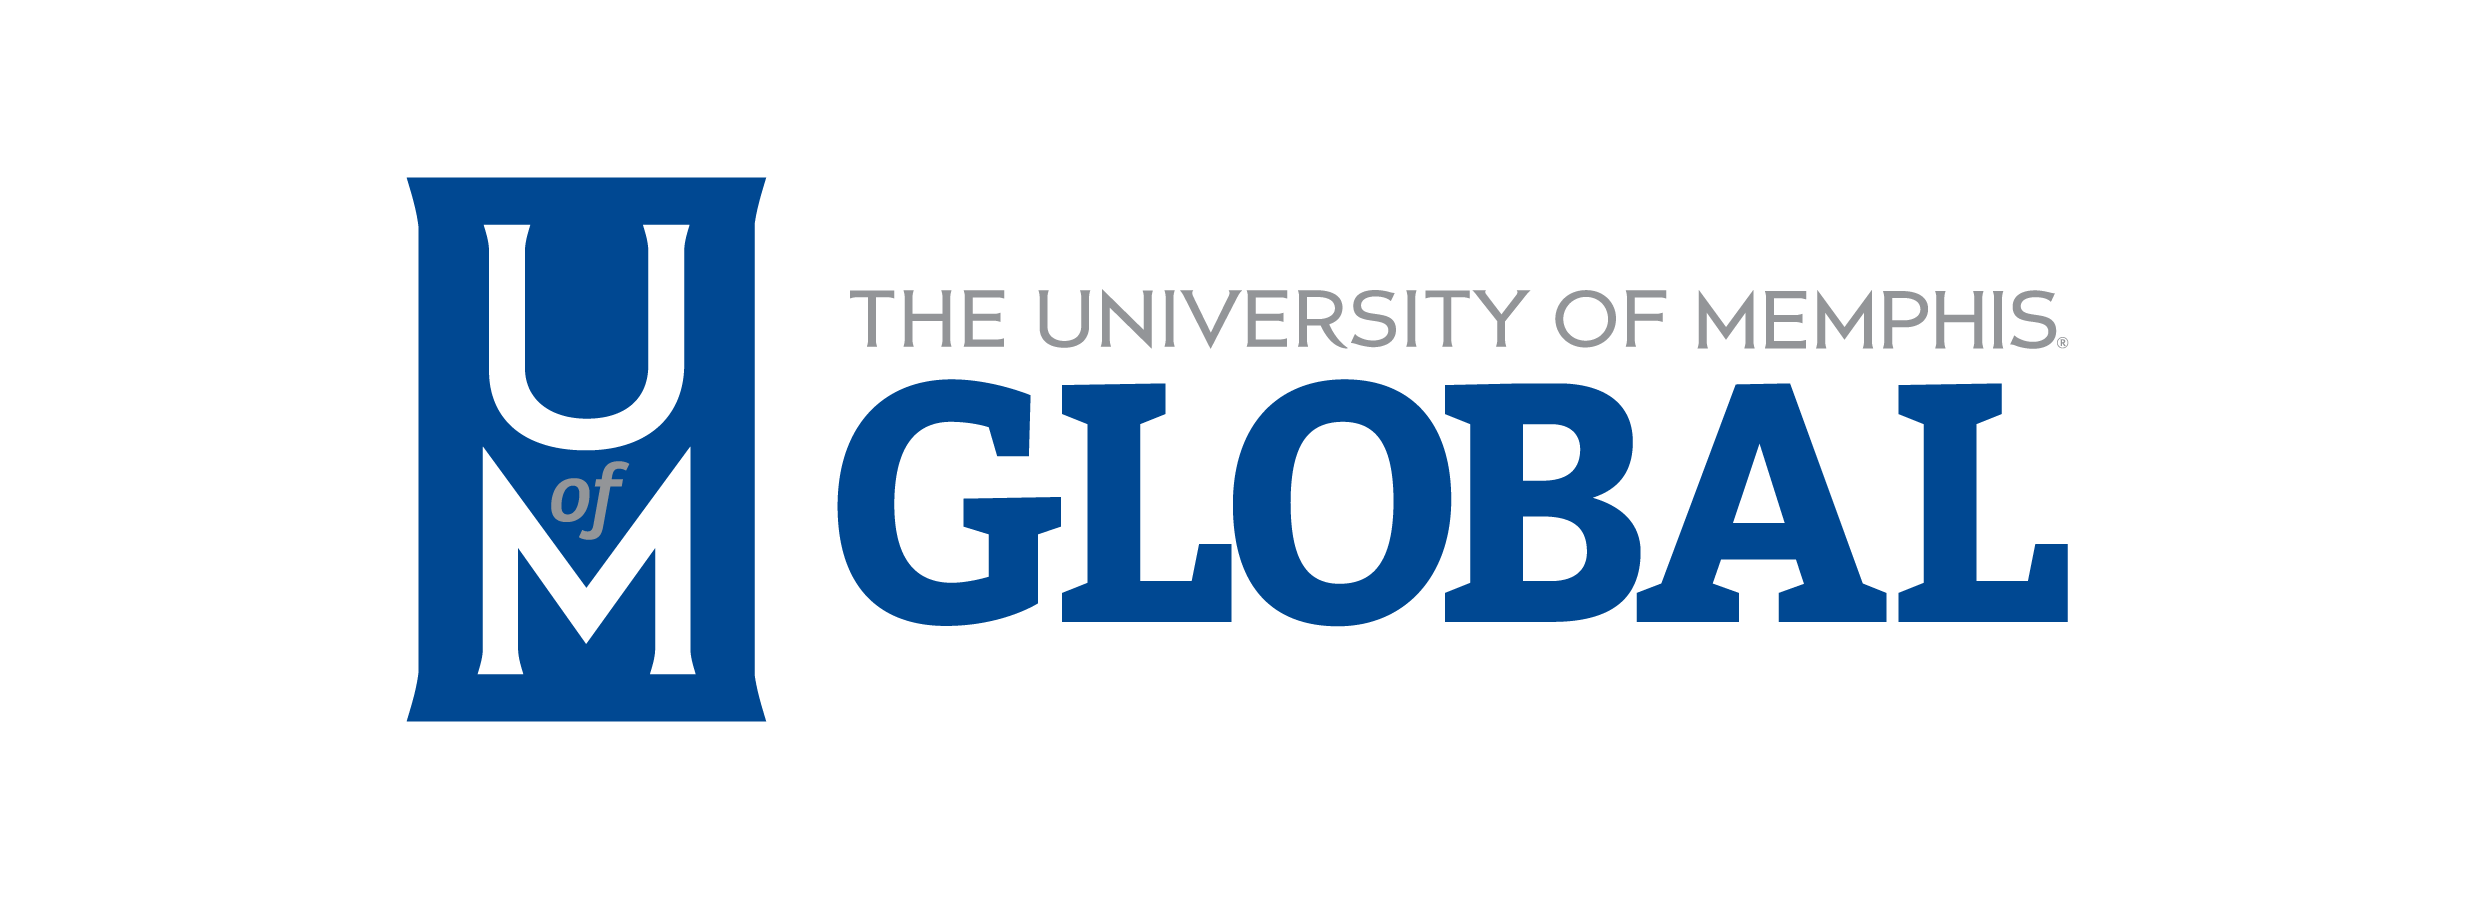 The university of memphis global logo